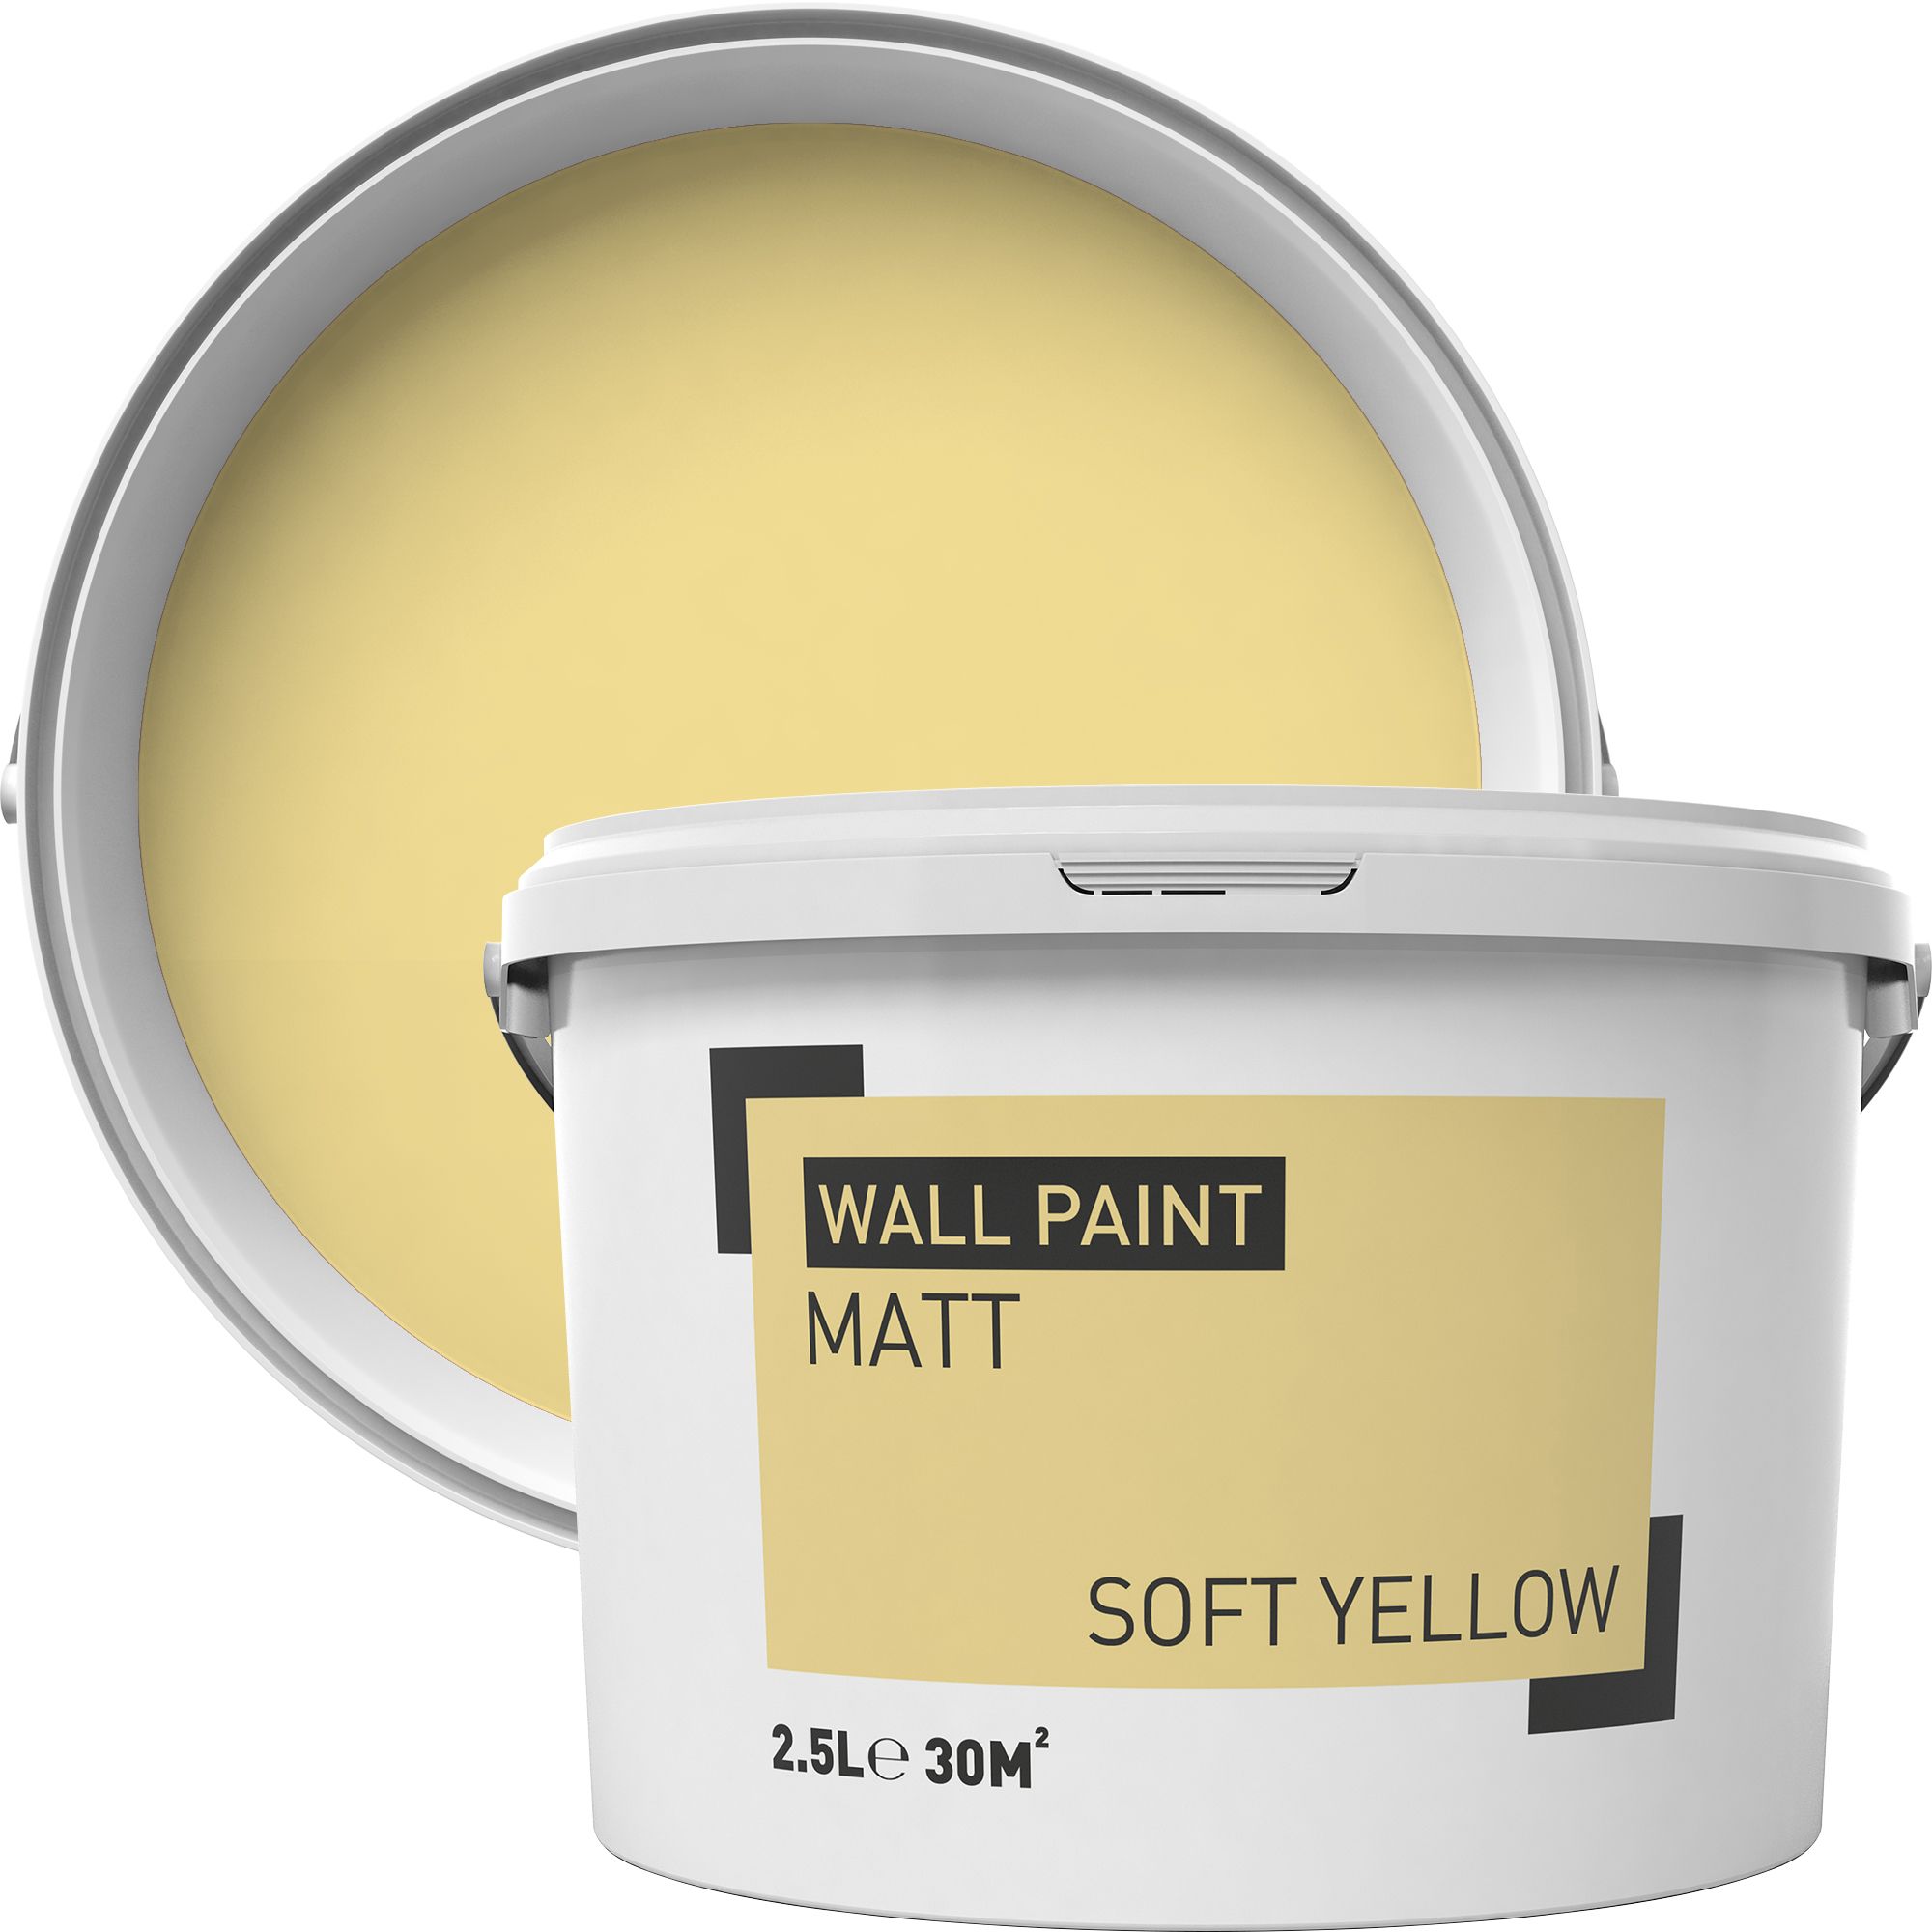 Soft yellow Matt Emulsion paint 2.5L | Departments | DIY at B&Q